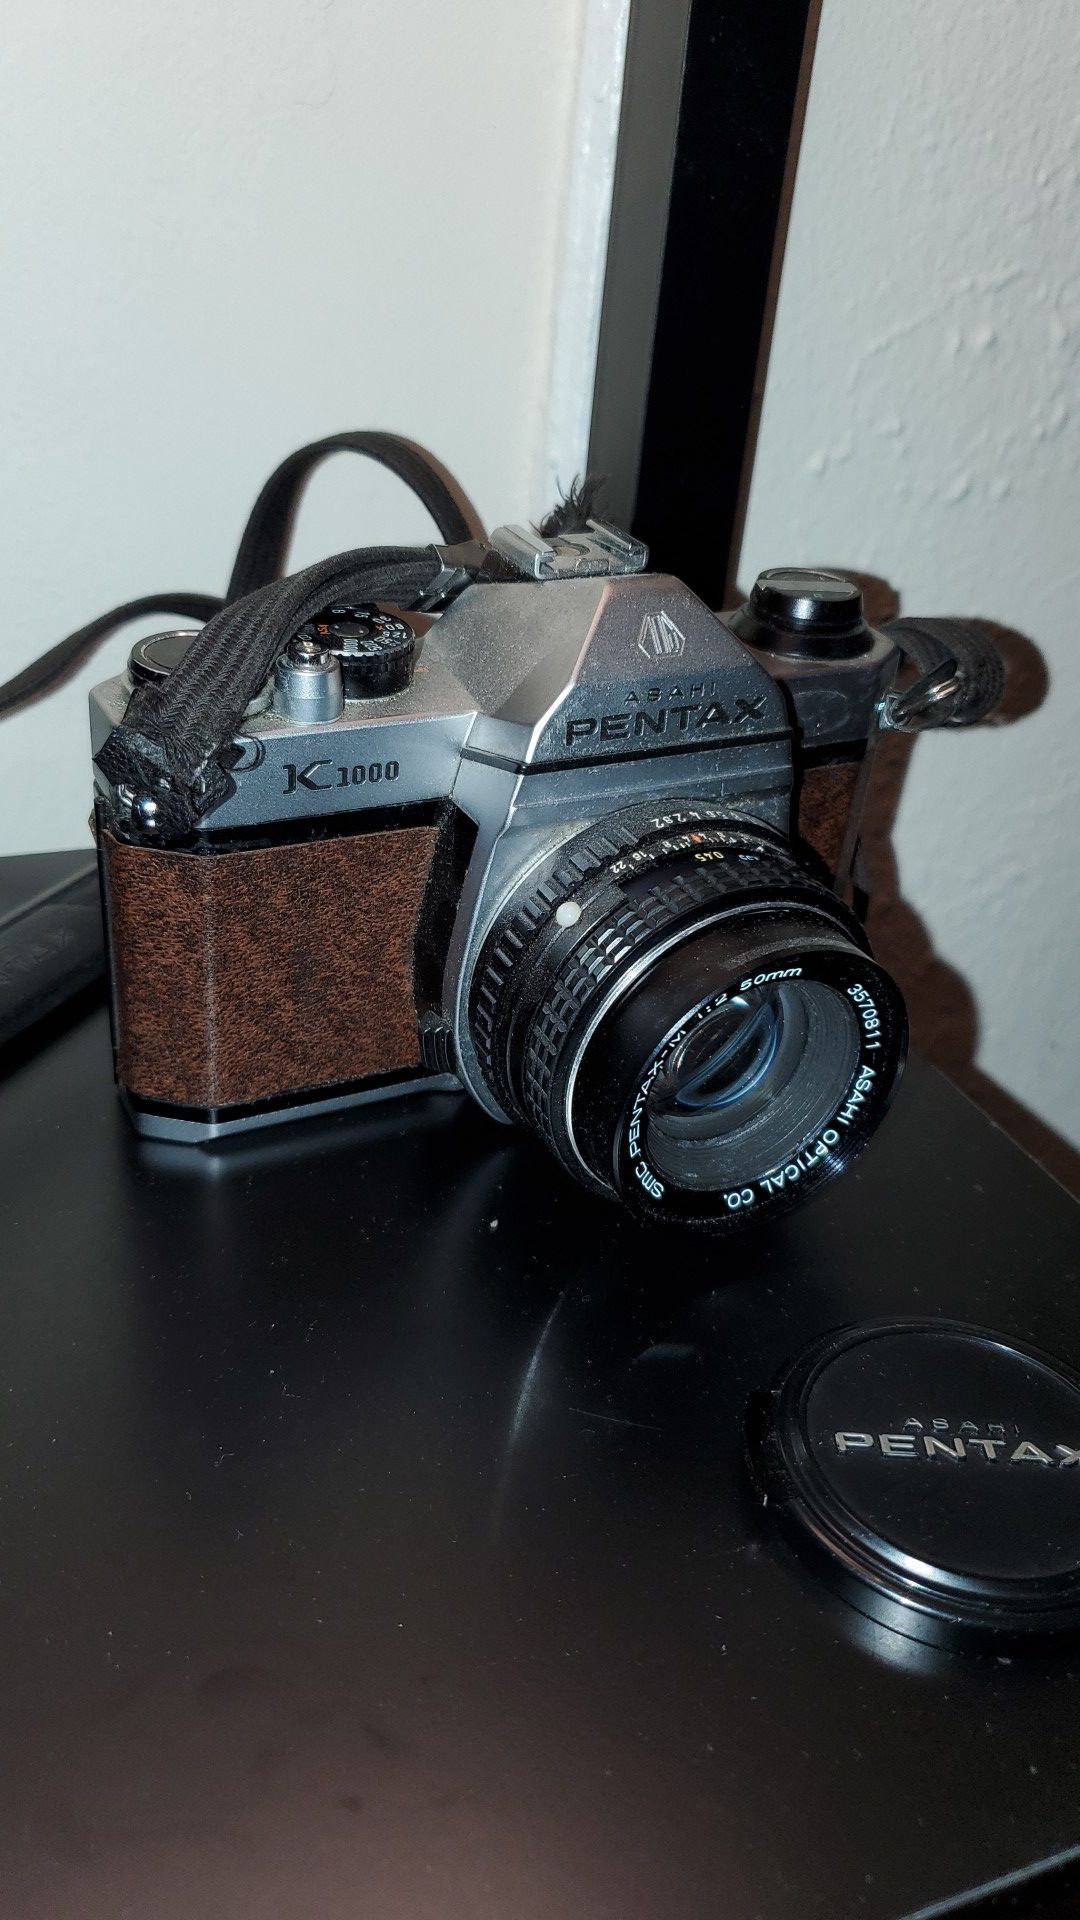 Pentax K1000 Manual Focus SLR Film Camera with Pentax 50mm Lens (Untested)